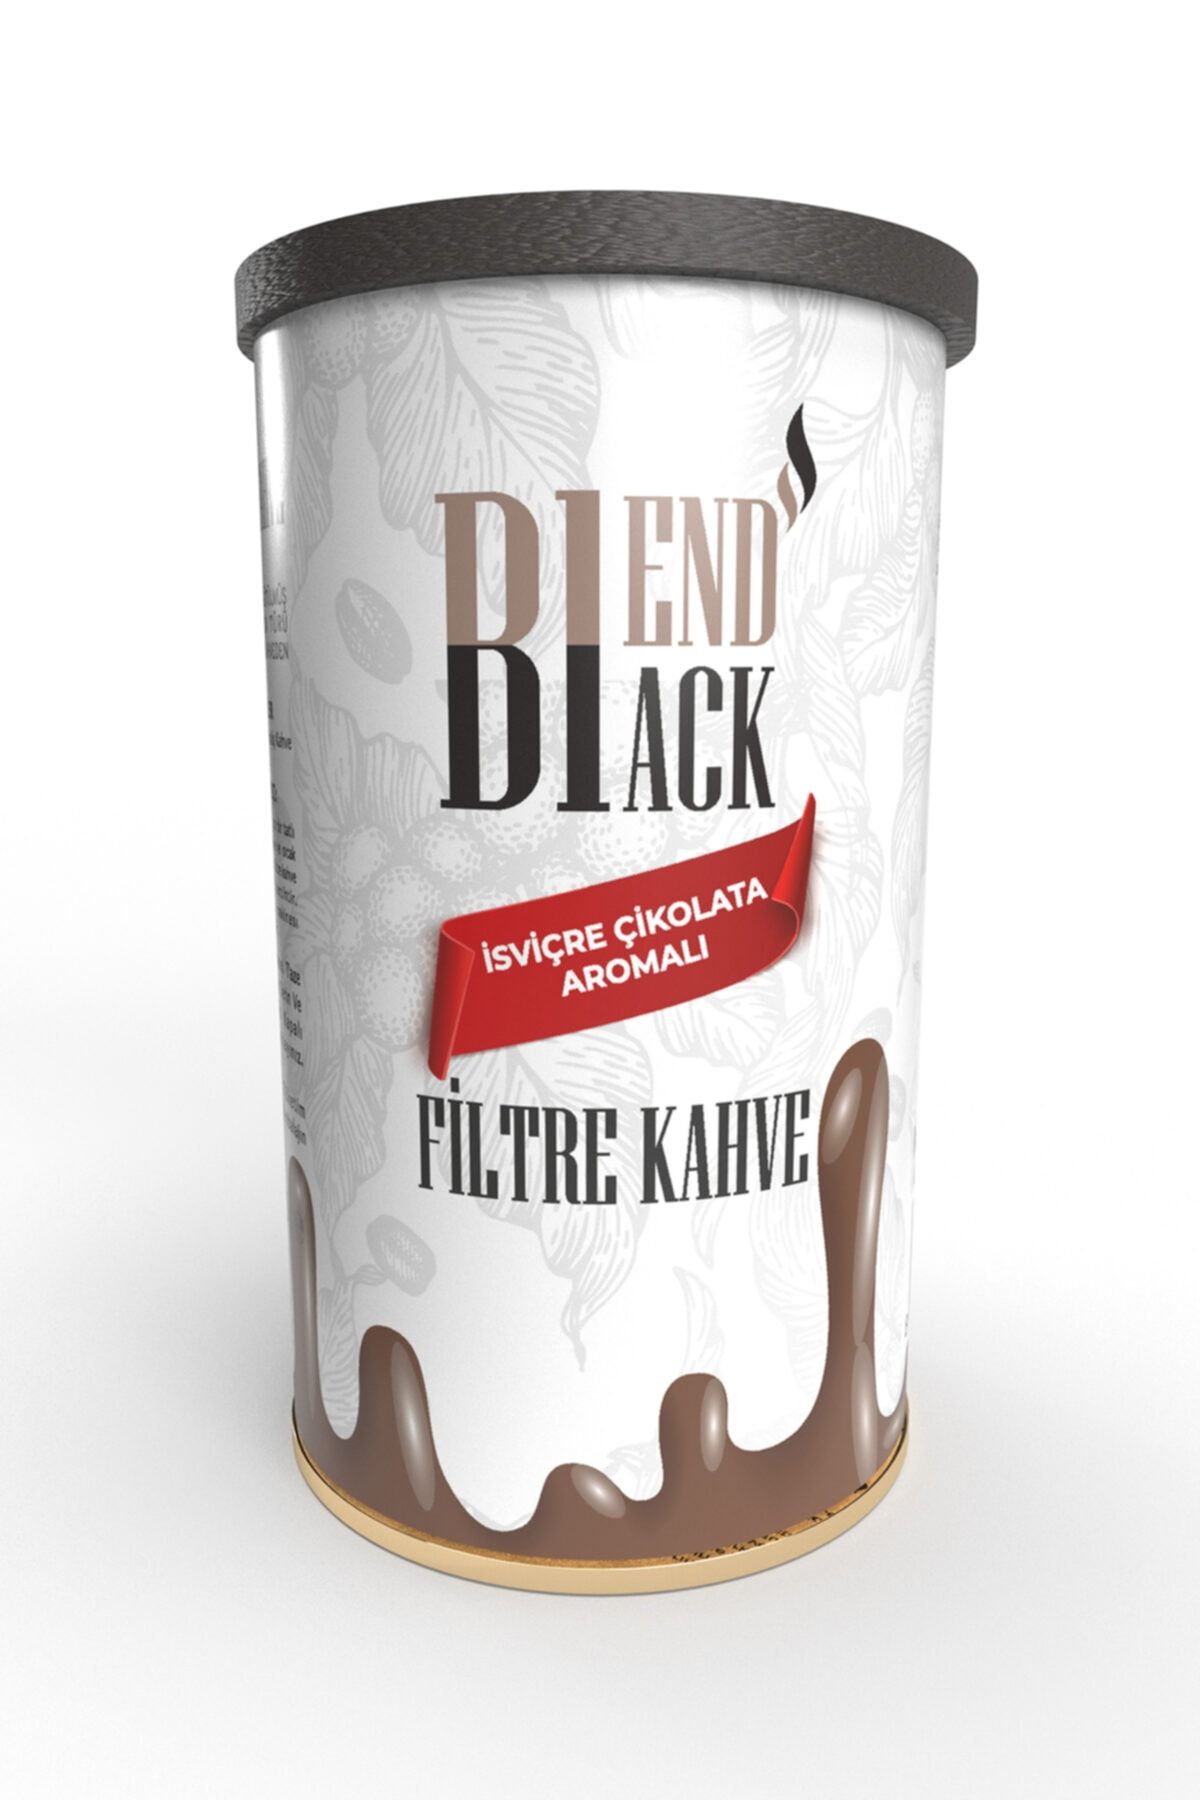 Blendblack Filtre Kahve Isviçre Çikolata Aromalı 250gr Teneke Kutu